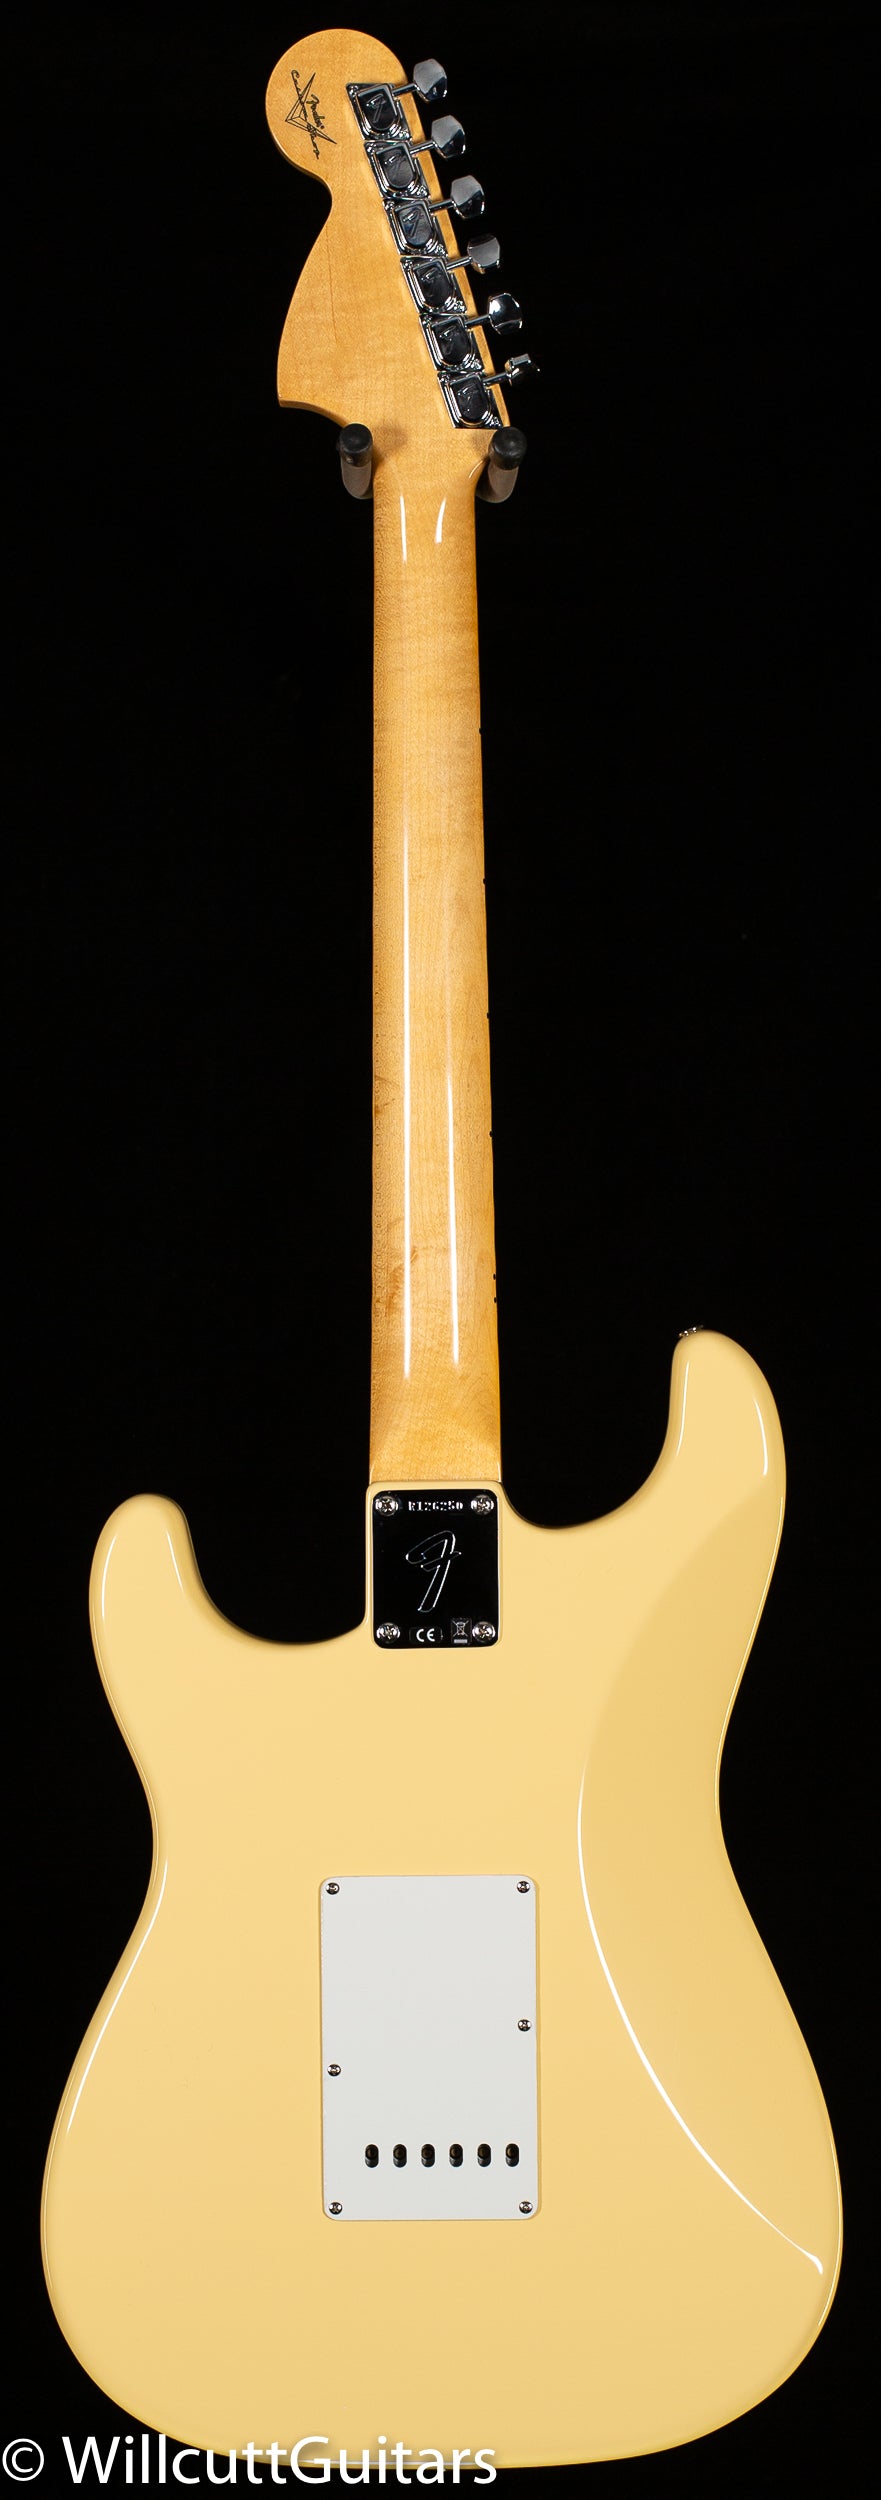 Fender Custom Shop Yngwie Malmsteen Signature Stratocaster